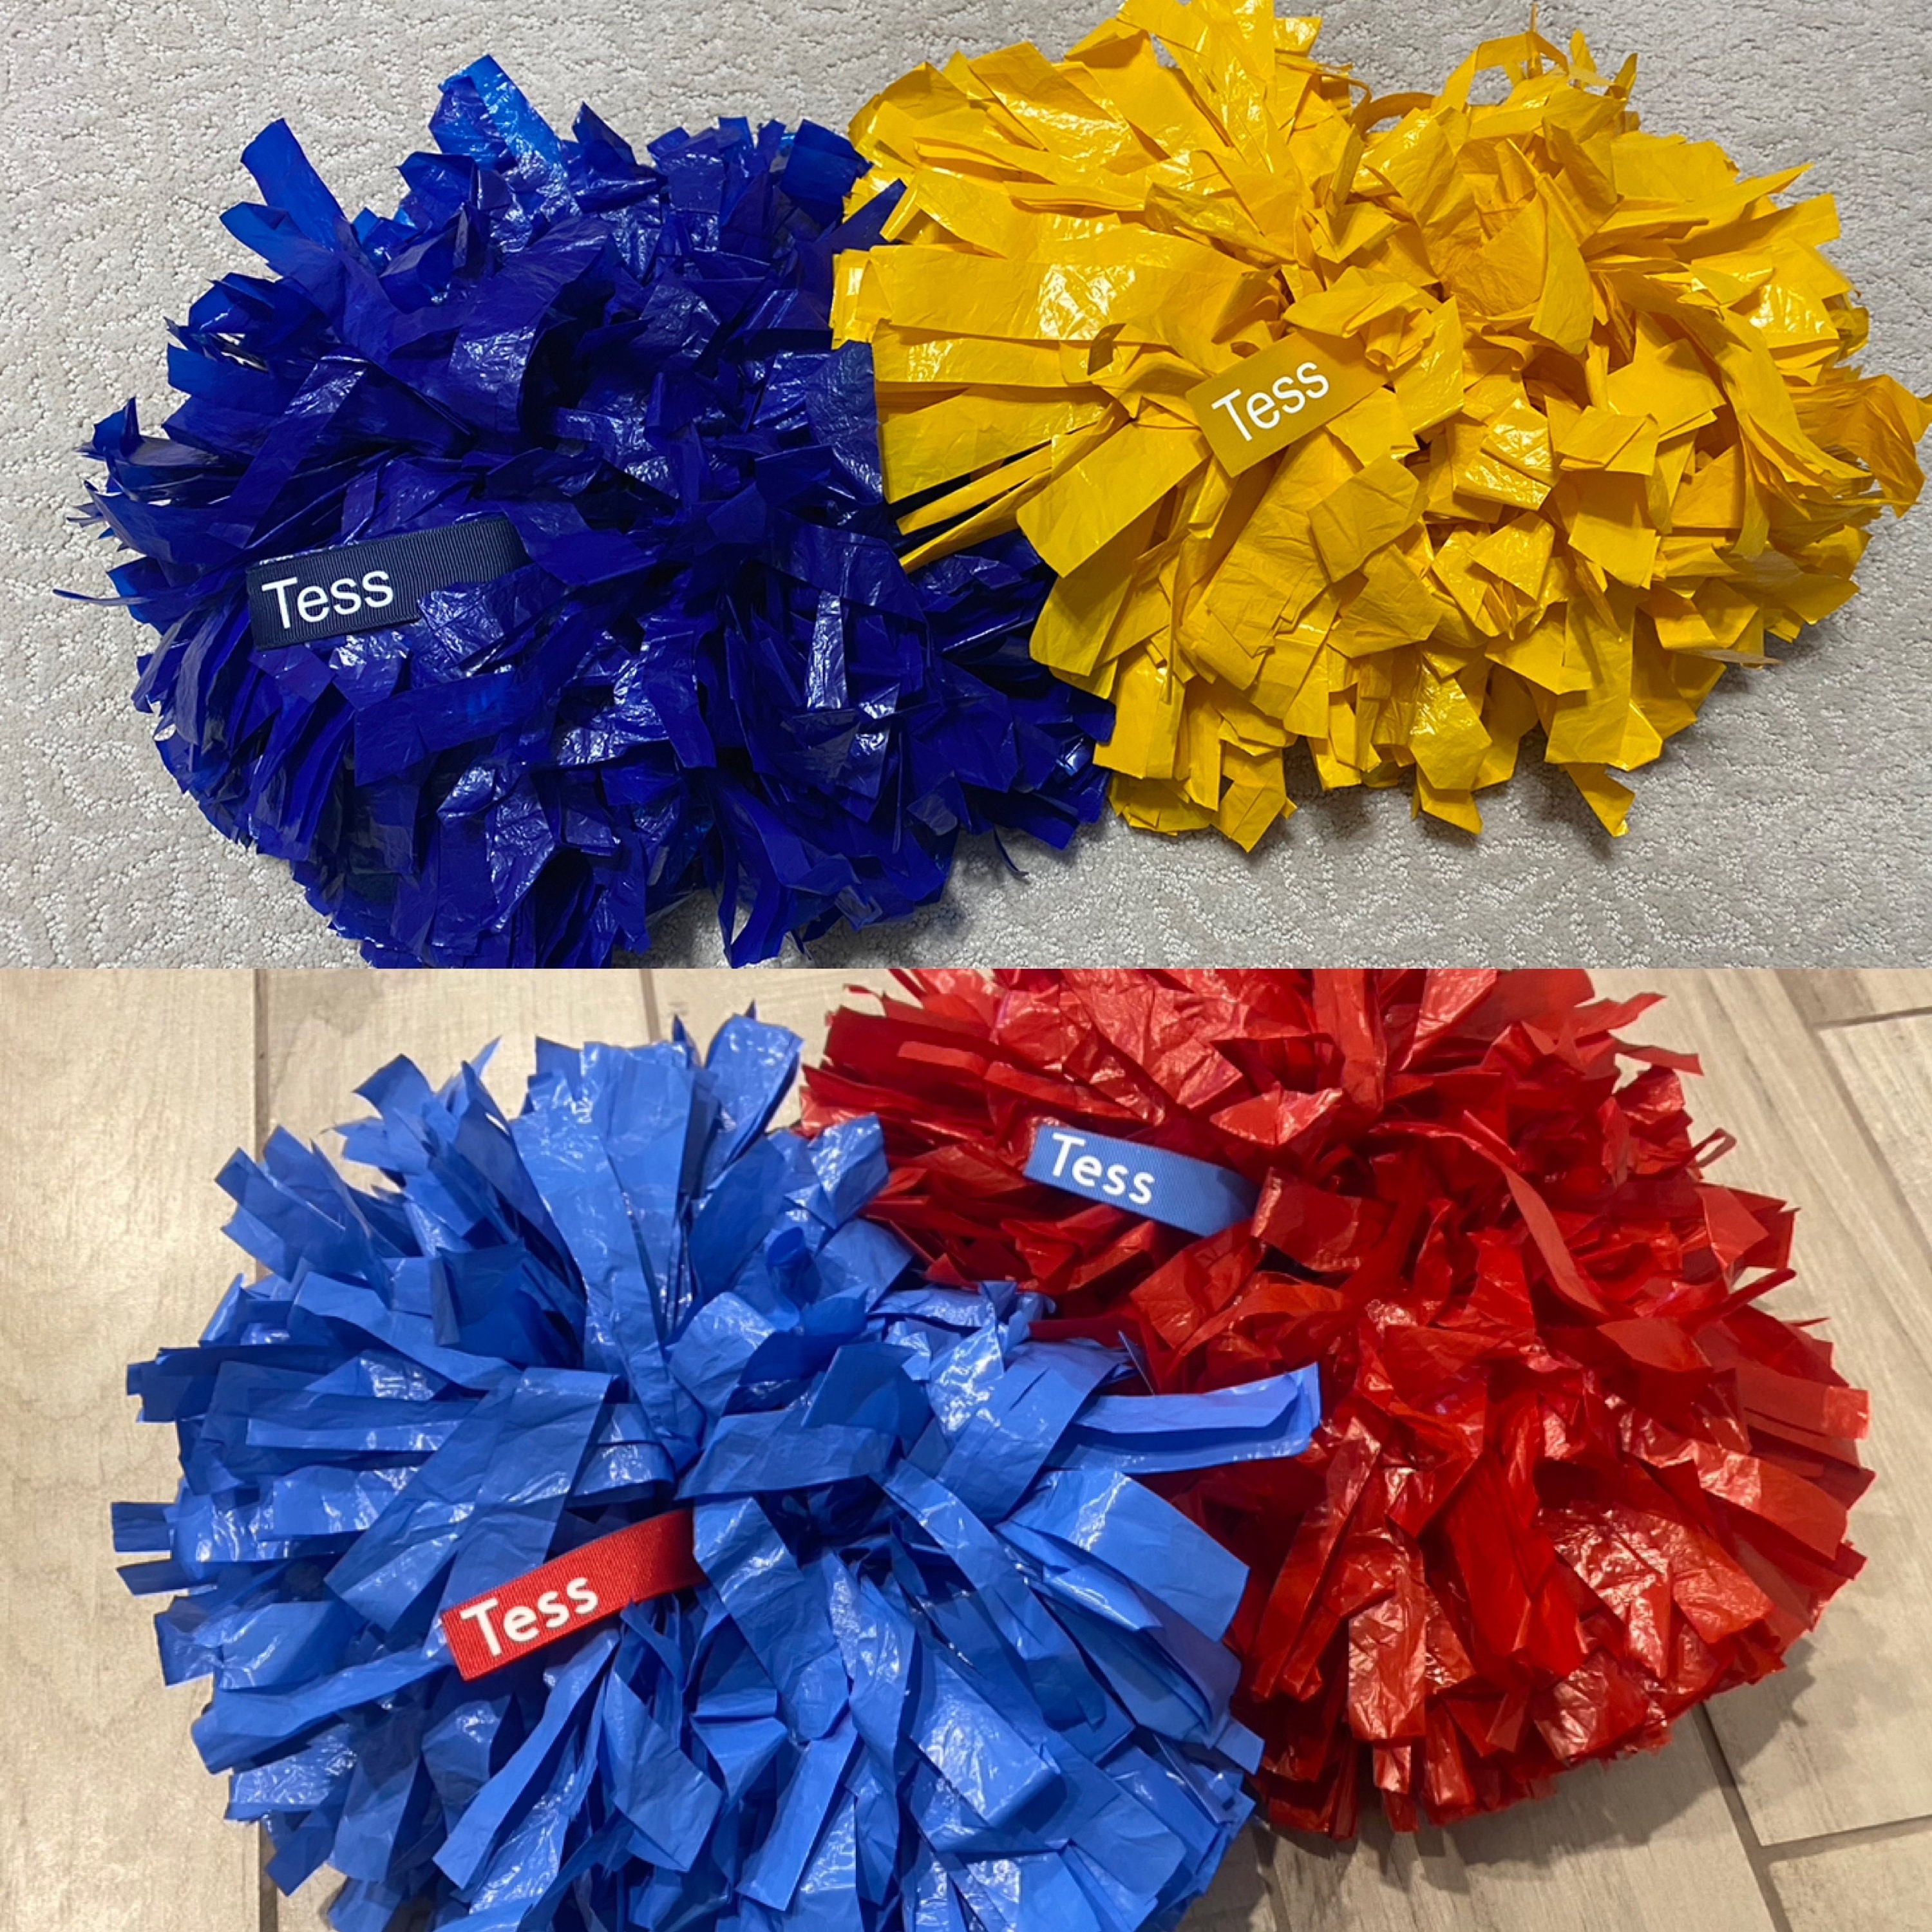 Plastic Cheer Pom Poms Cheerleading Cheerleader Gear 2 pieces one pair  poms(Royal Blue/White)